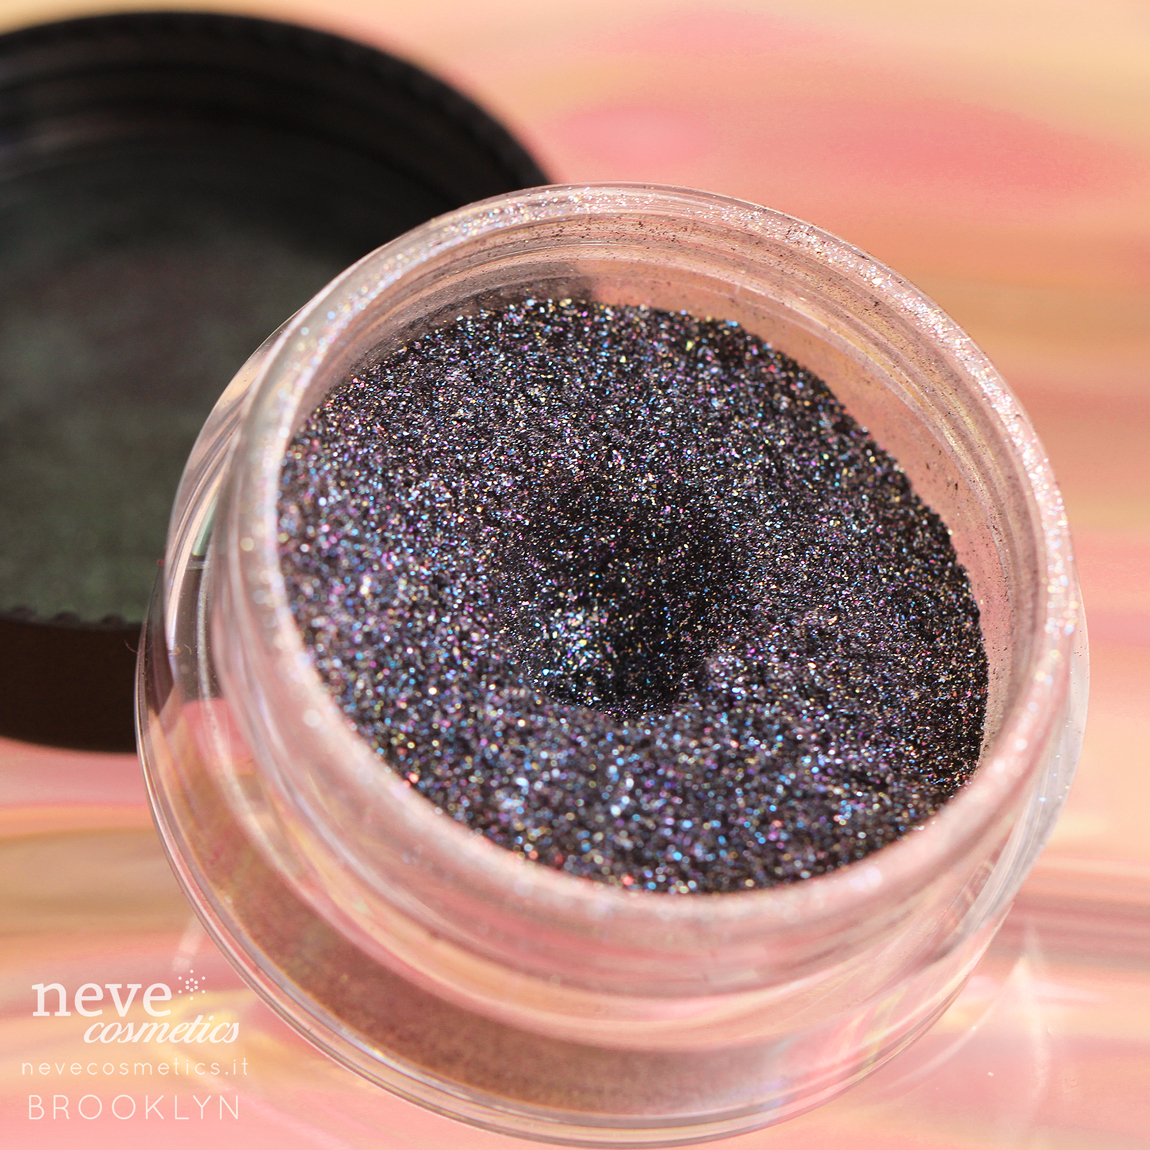 Brooklyn black mineral eyeshadow glittery: perfect for makeup Smokey eyes